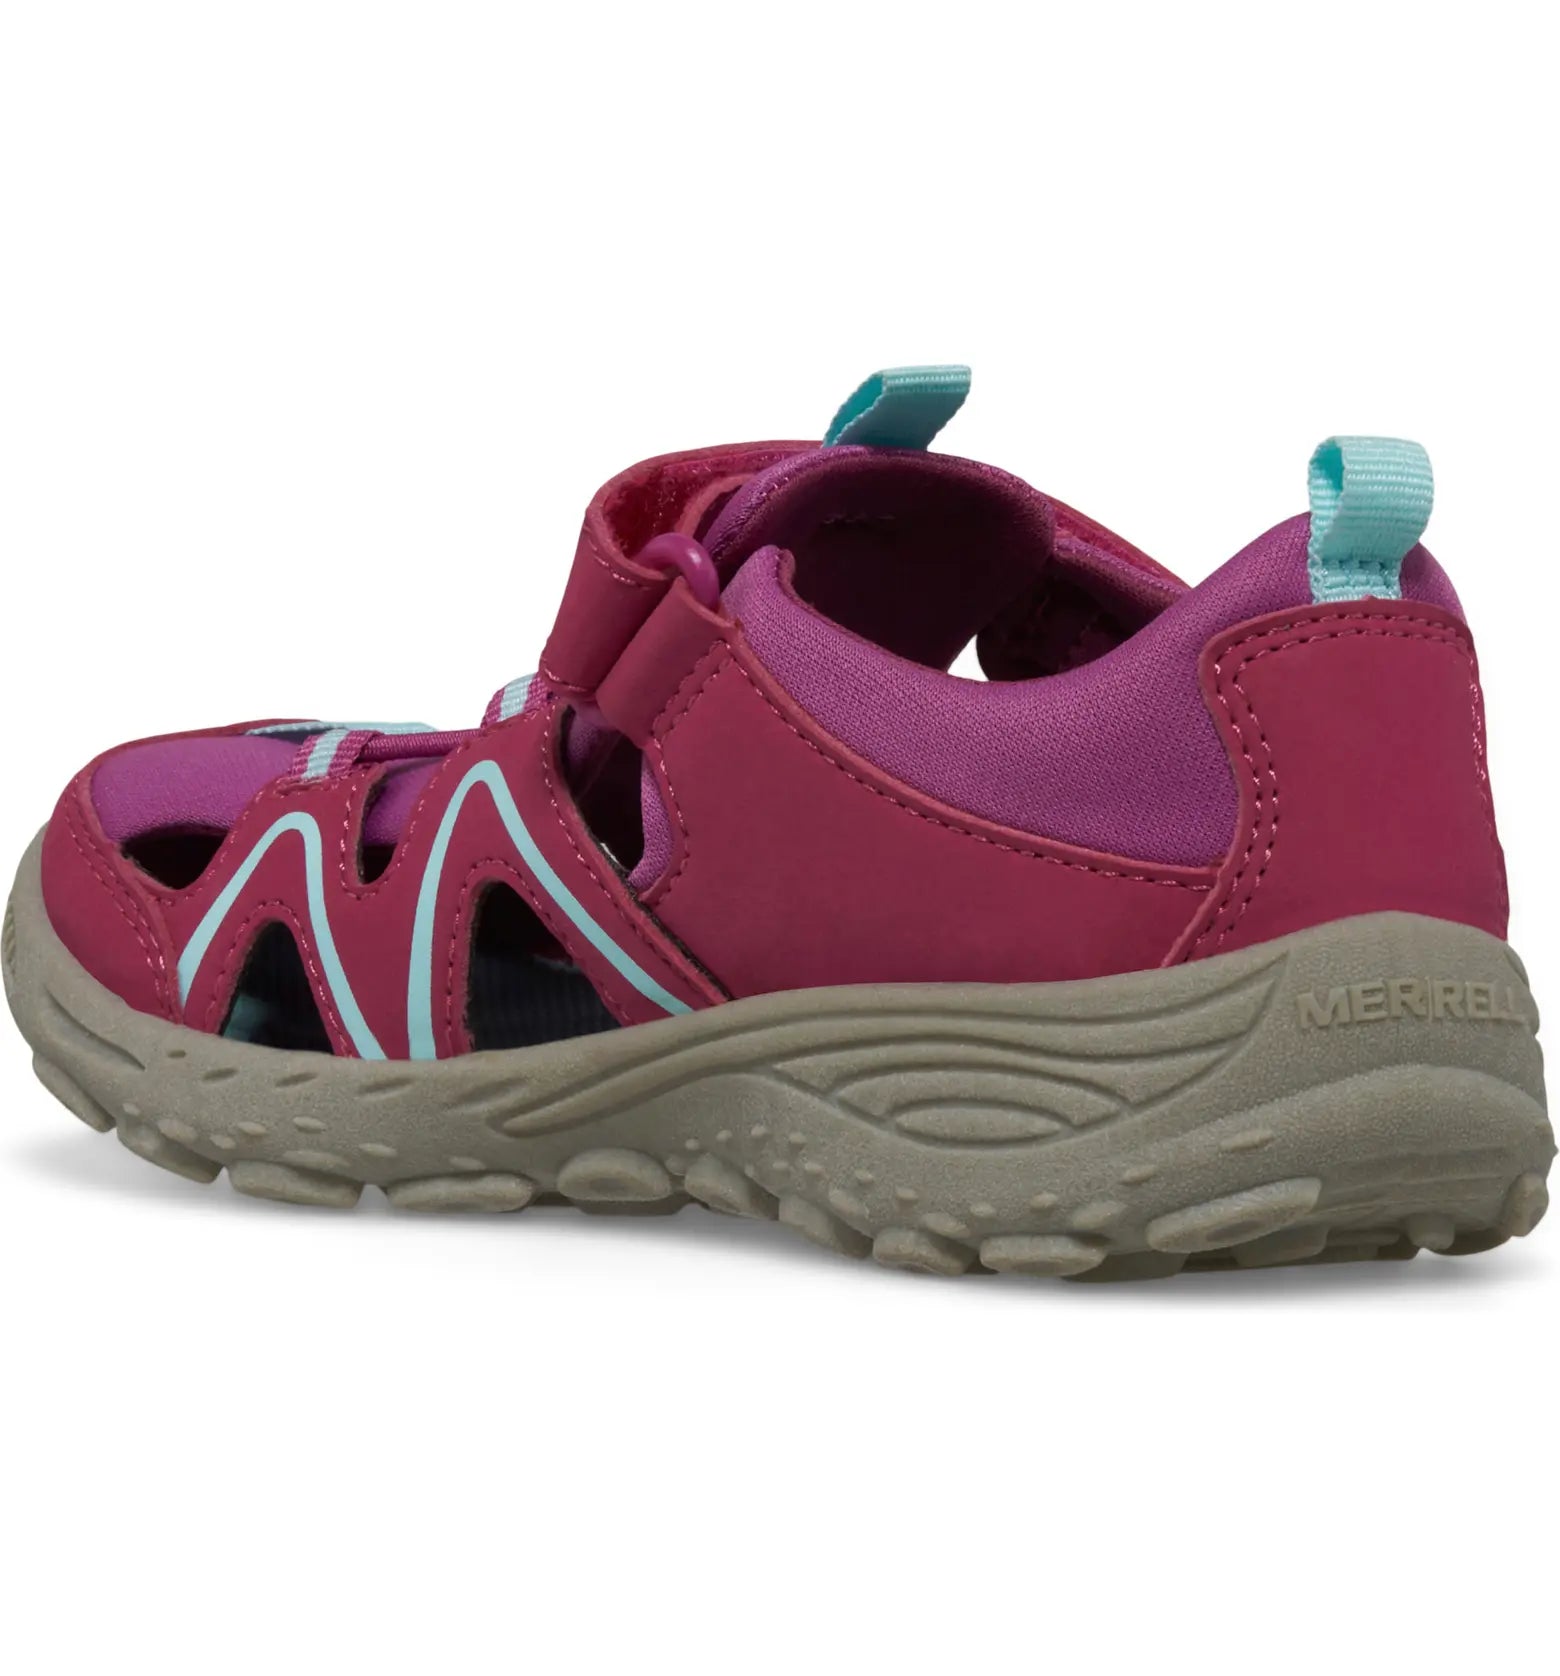 MERRELL WOMEN'S SANDSPUR Rose Convert Sandals US Size 9 EUR 40 J57520  £14.41 - PicClick UK